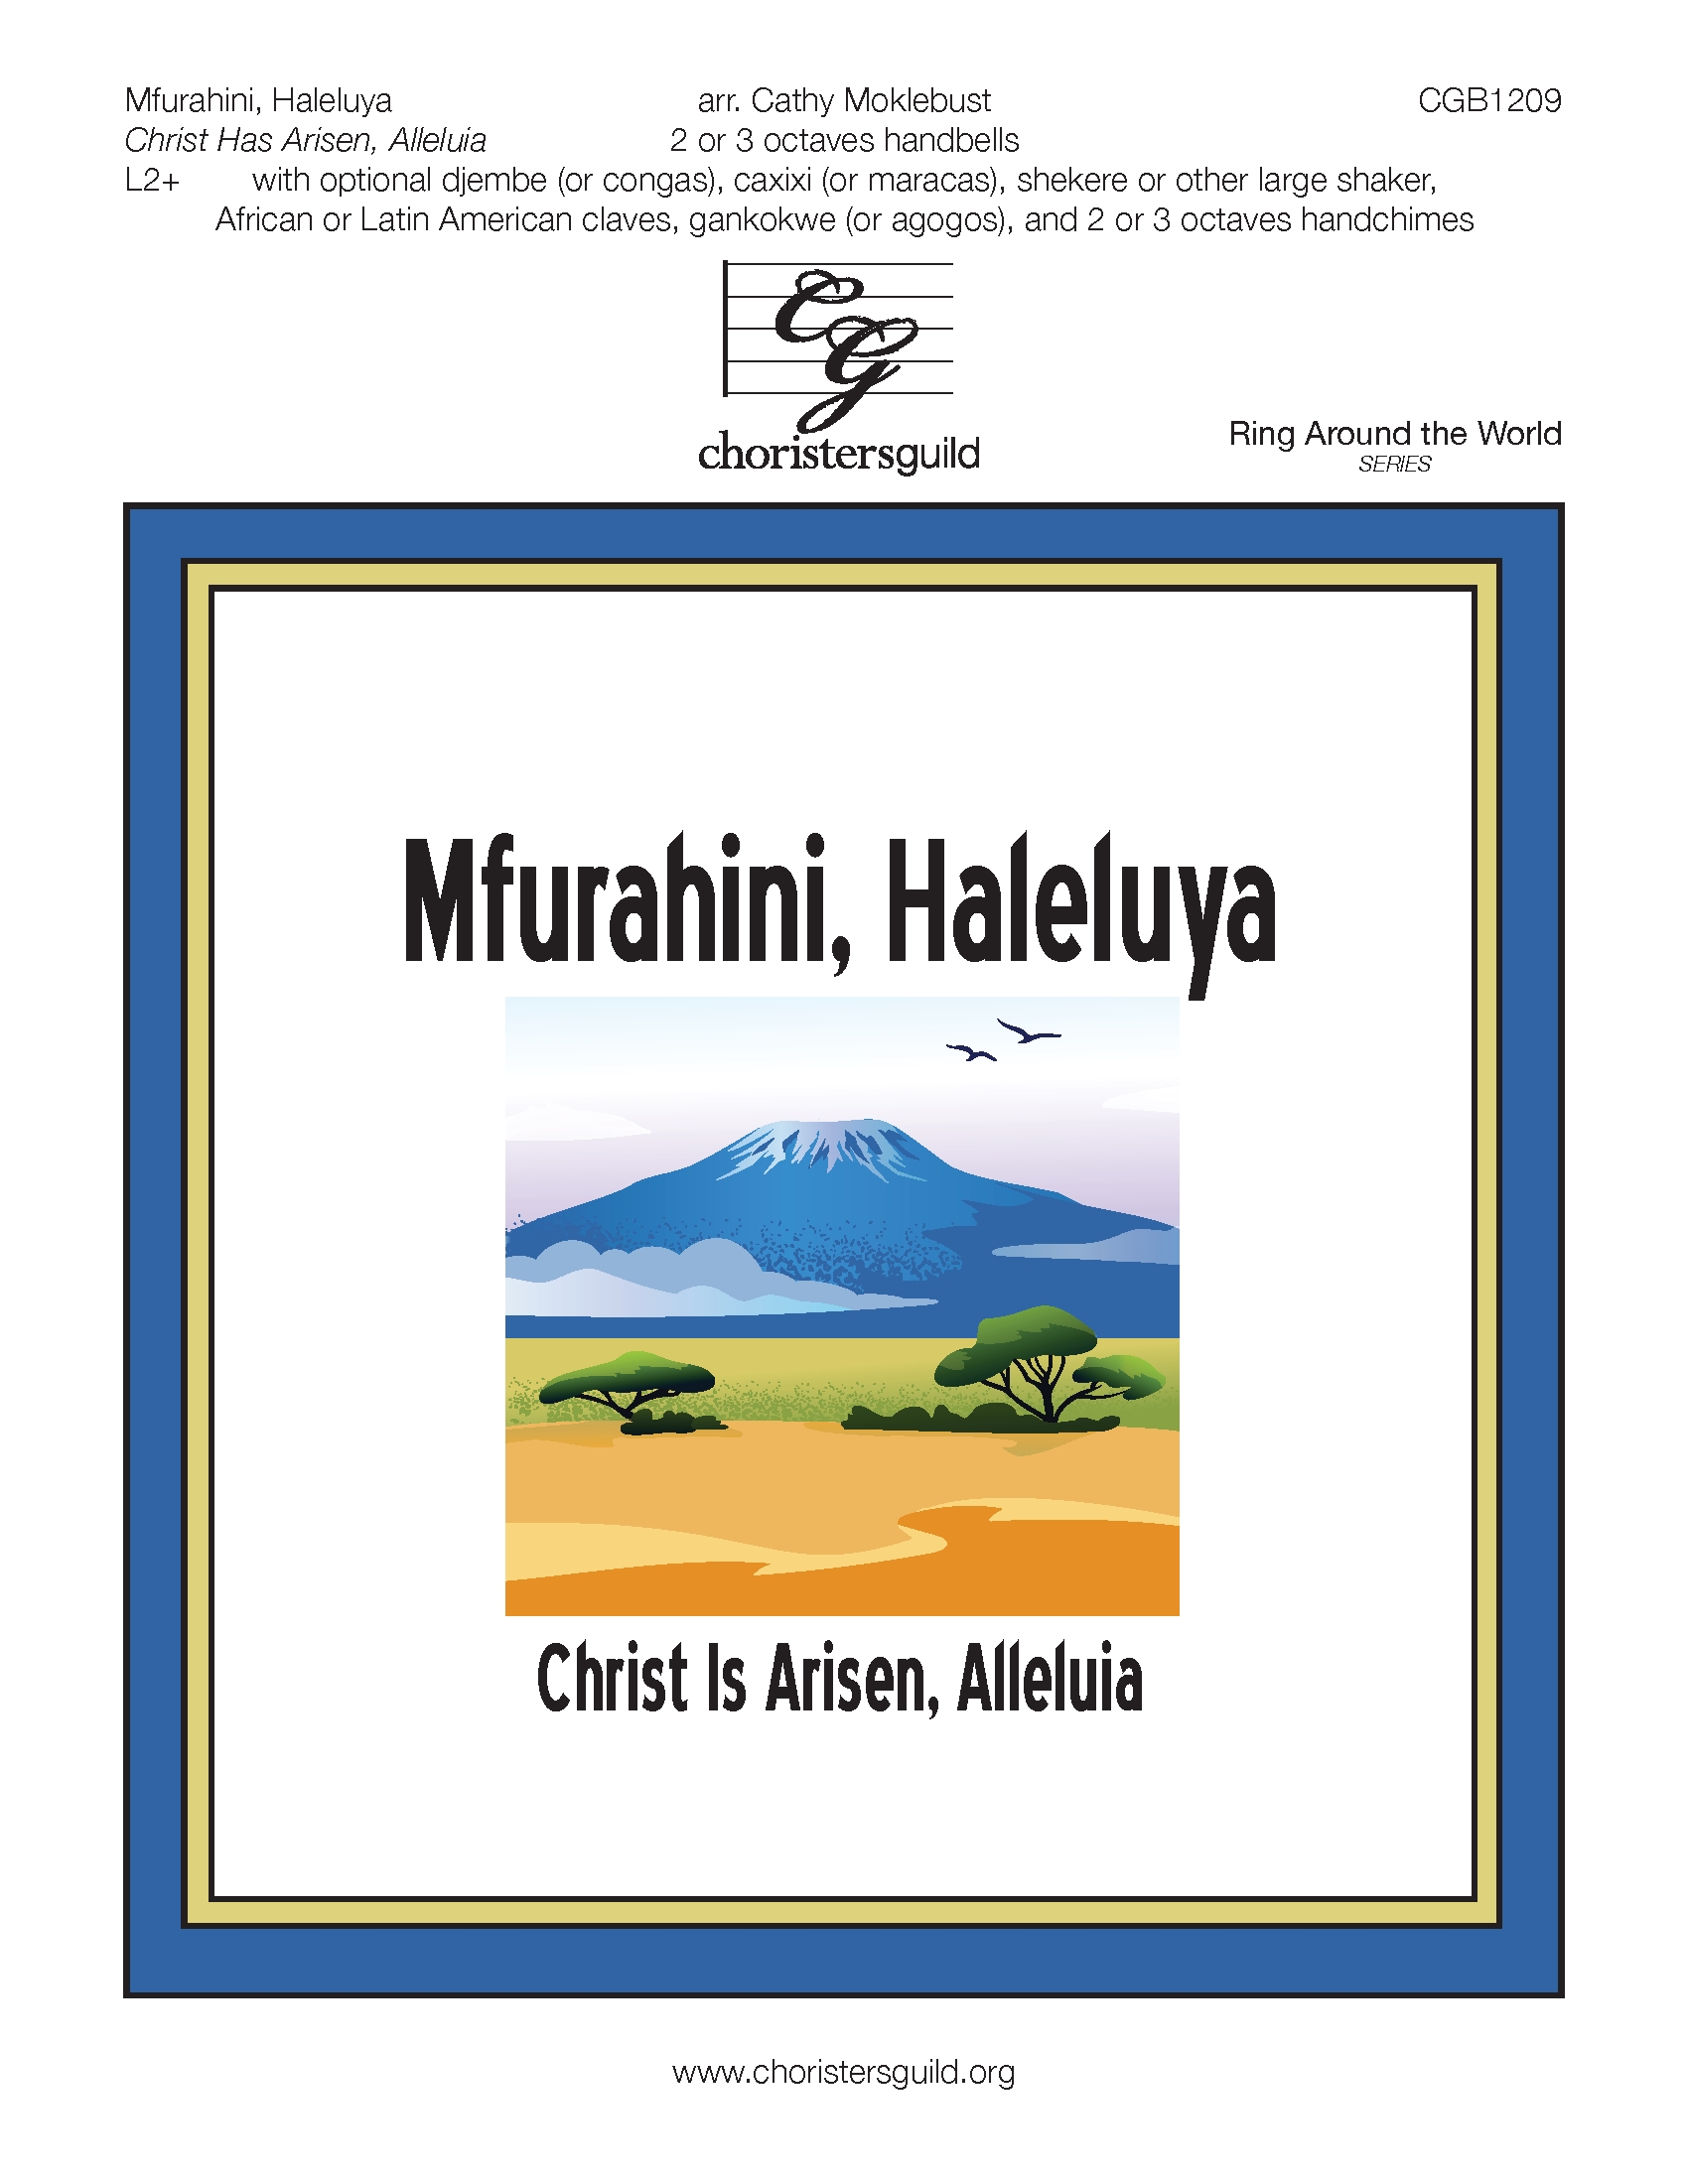 Mfurahini Haleluya (Christ is Risen, Alleluia) - 2-3 octaves